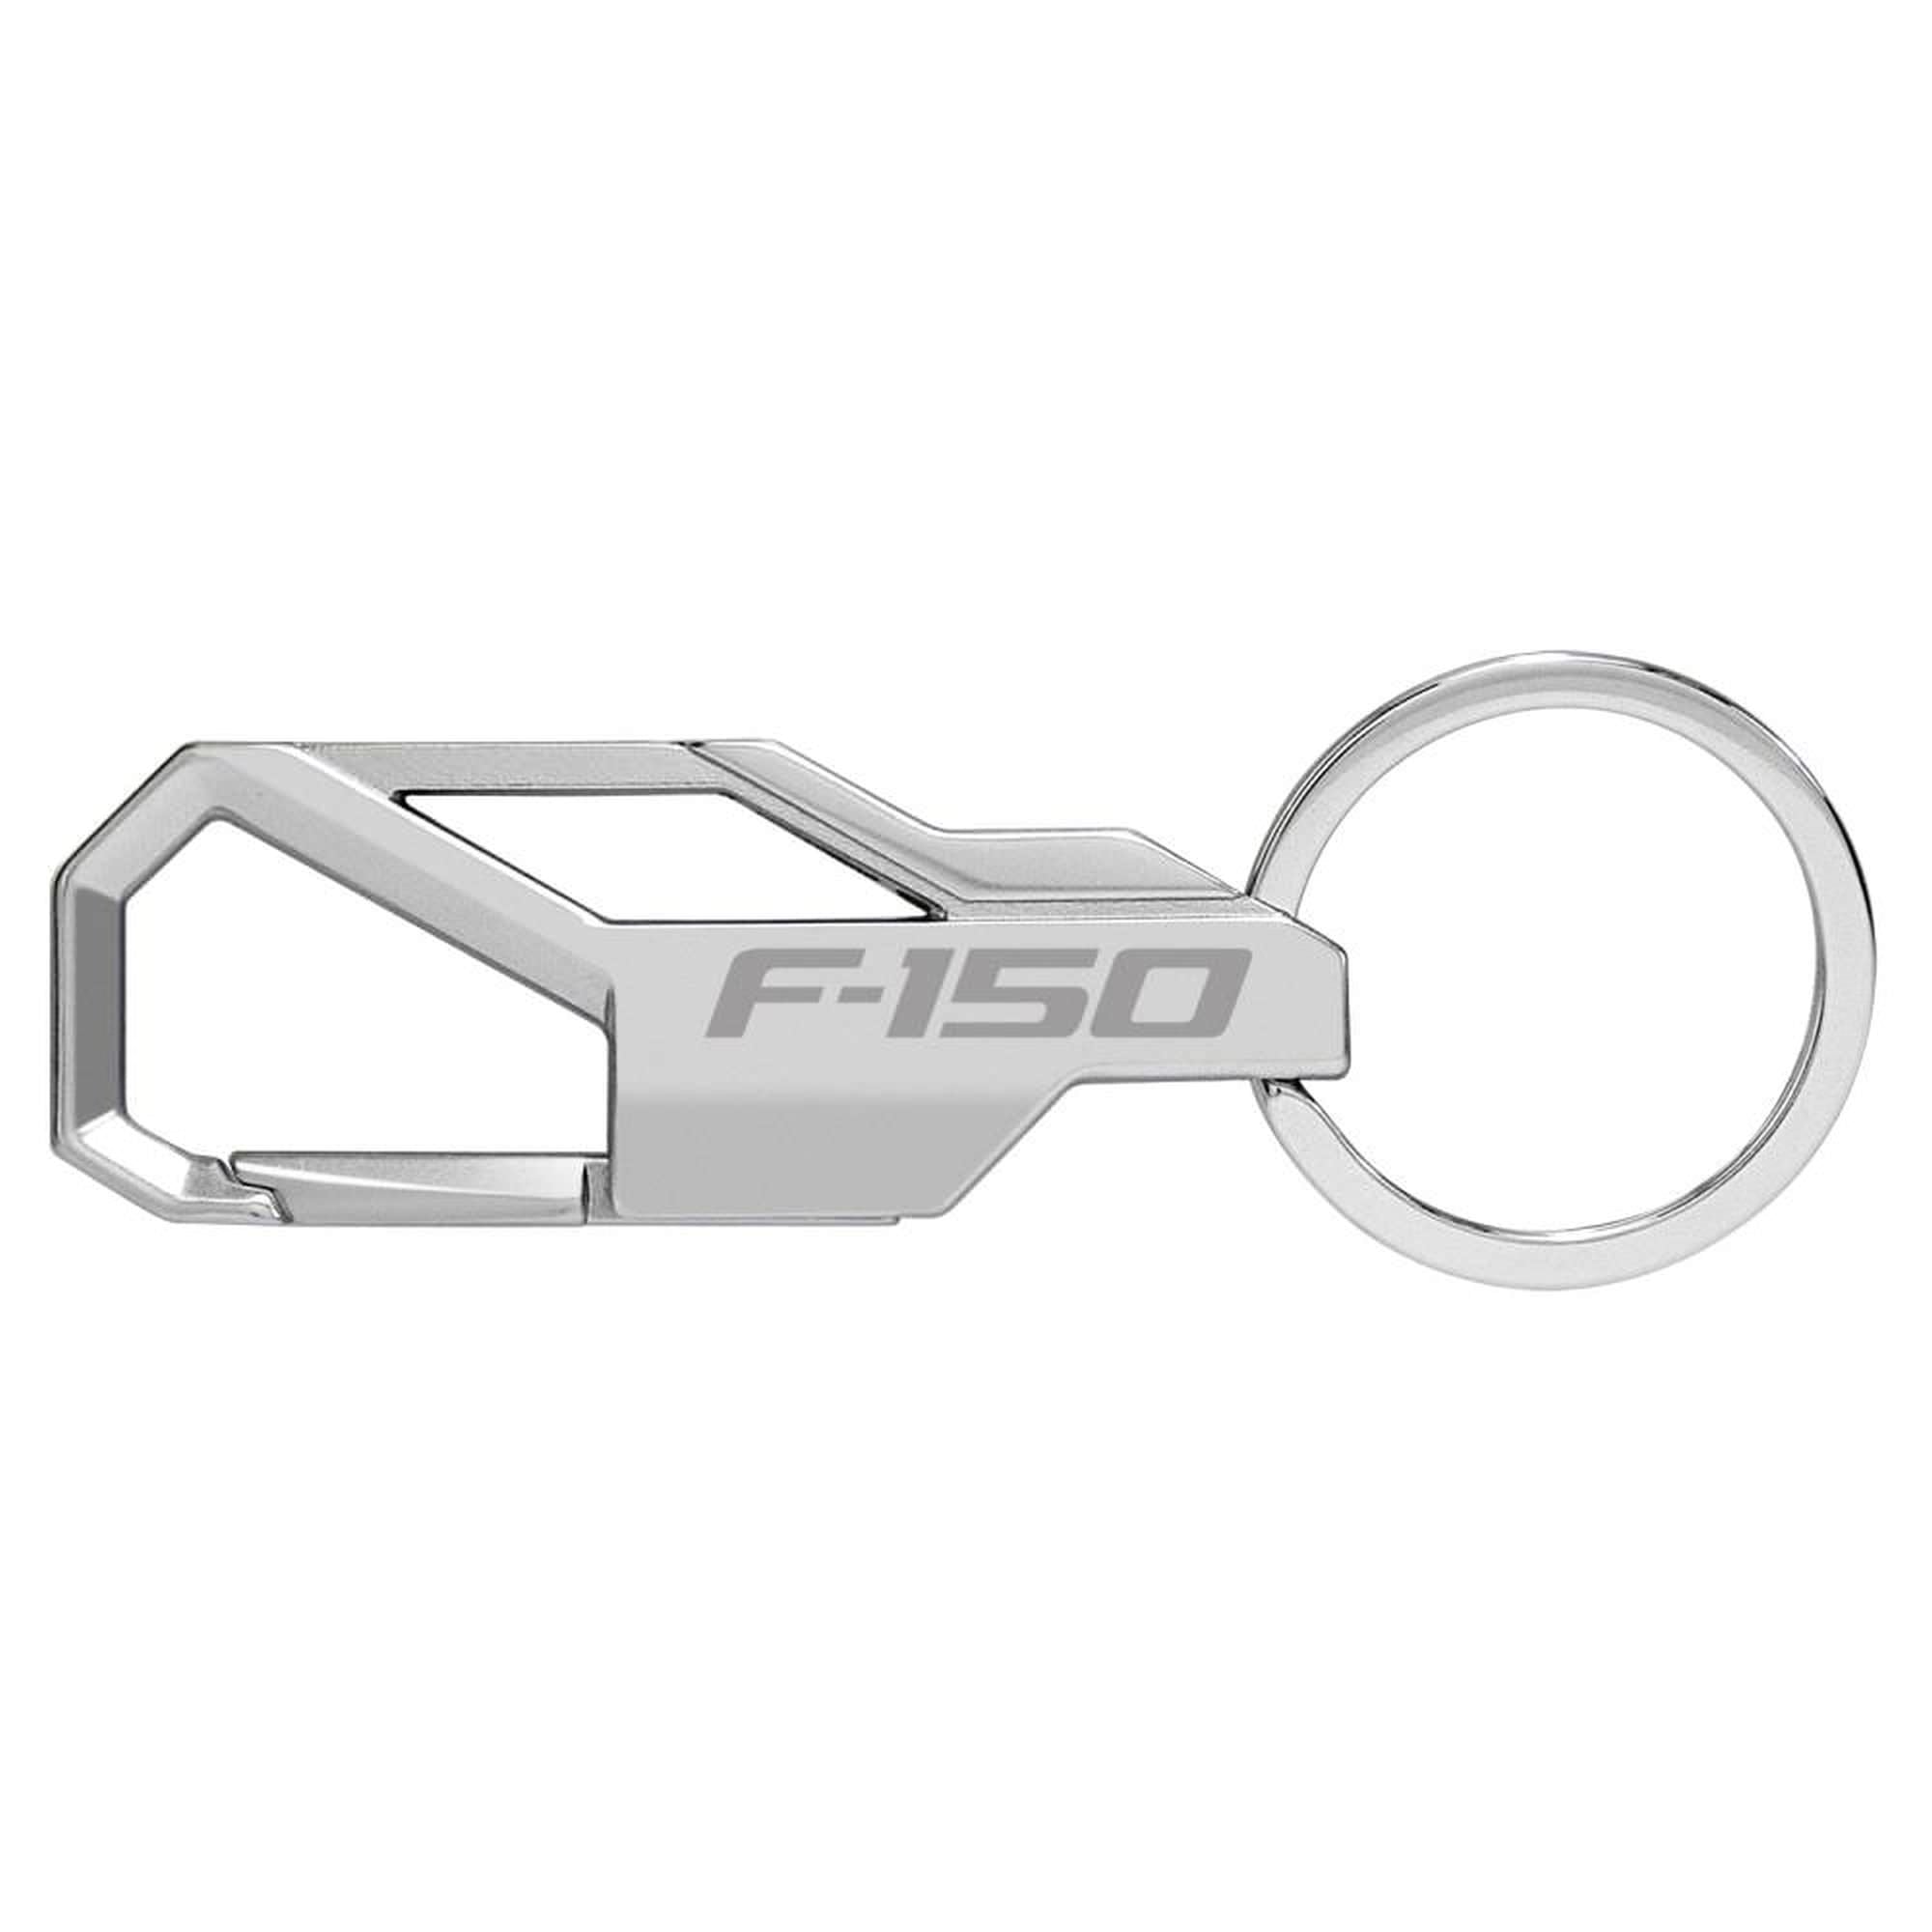 Ford,F-150,Key Chain